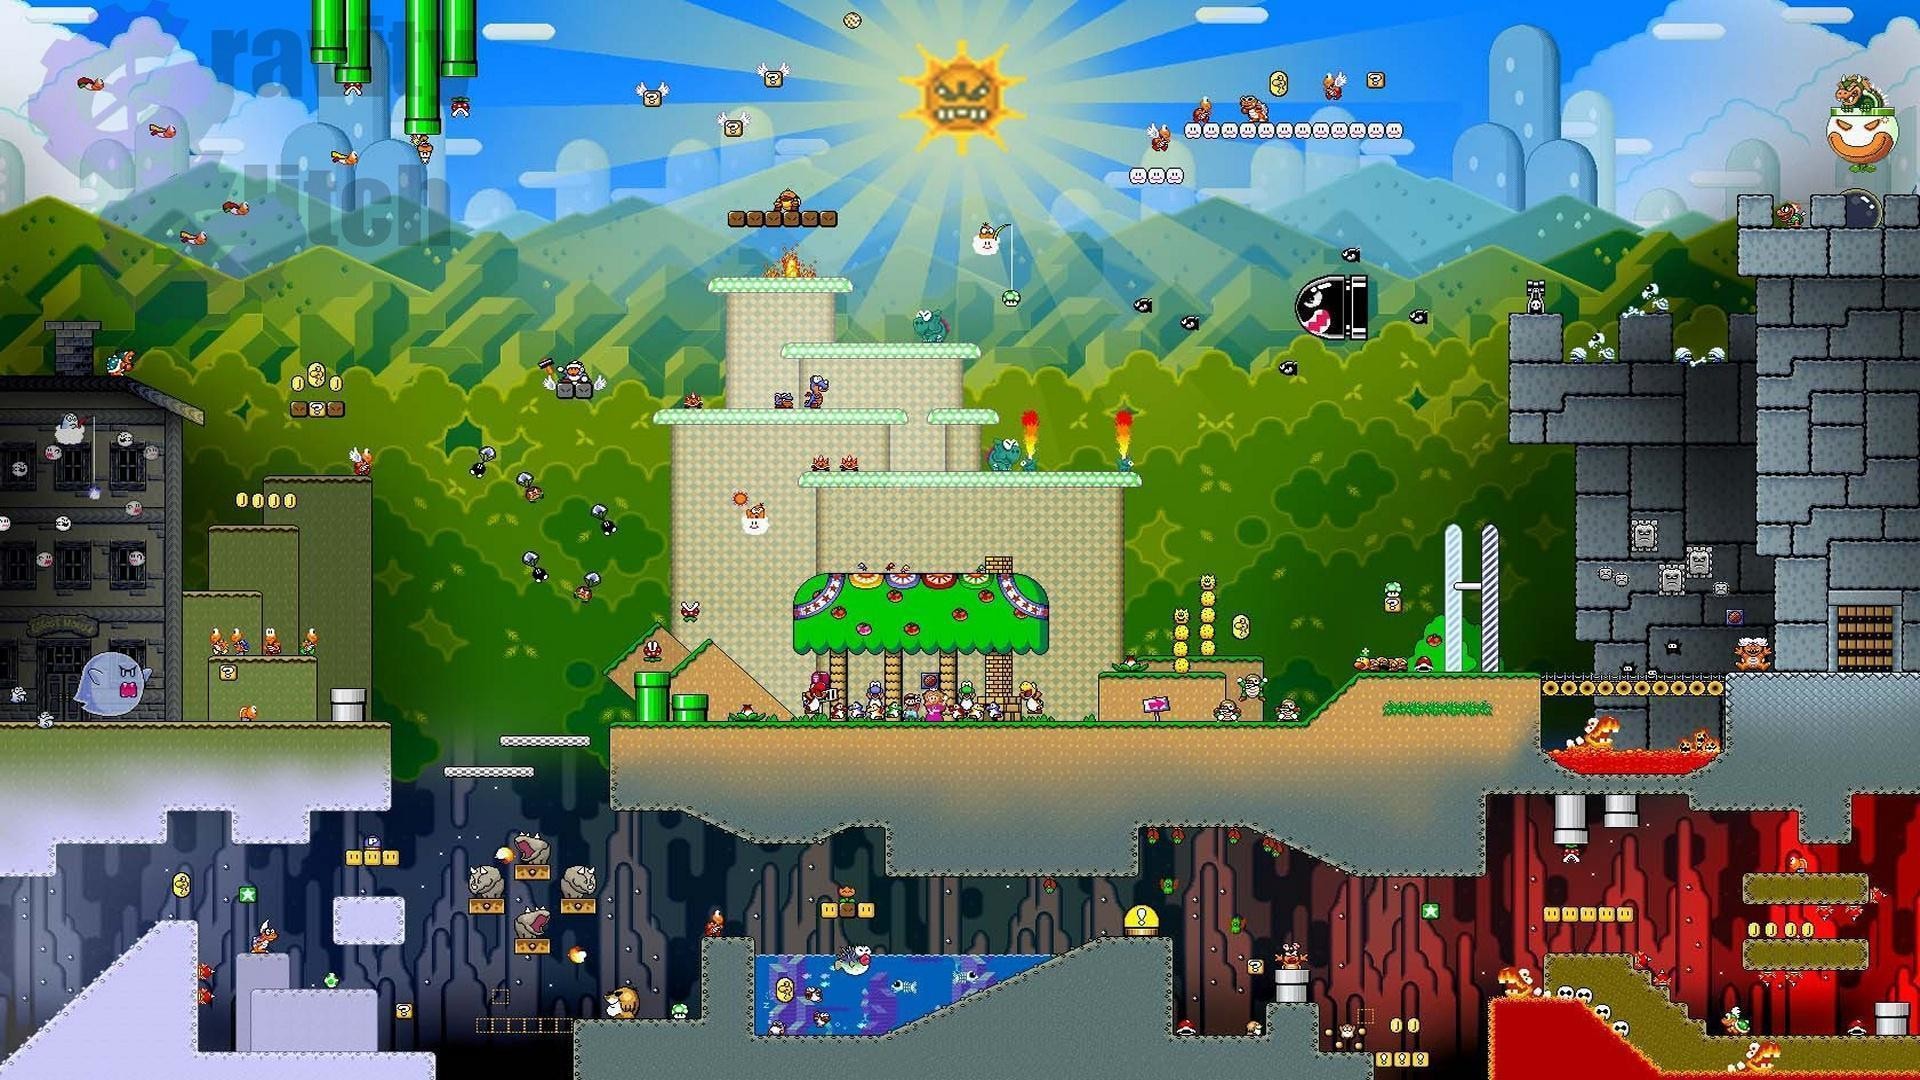 Cool Mario Background Image